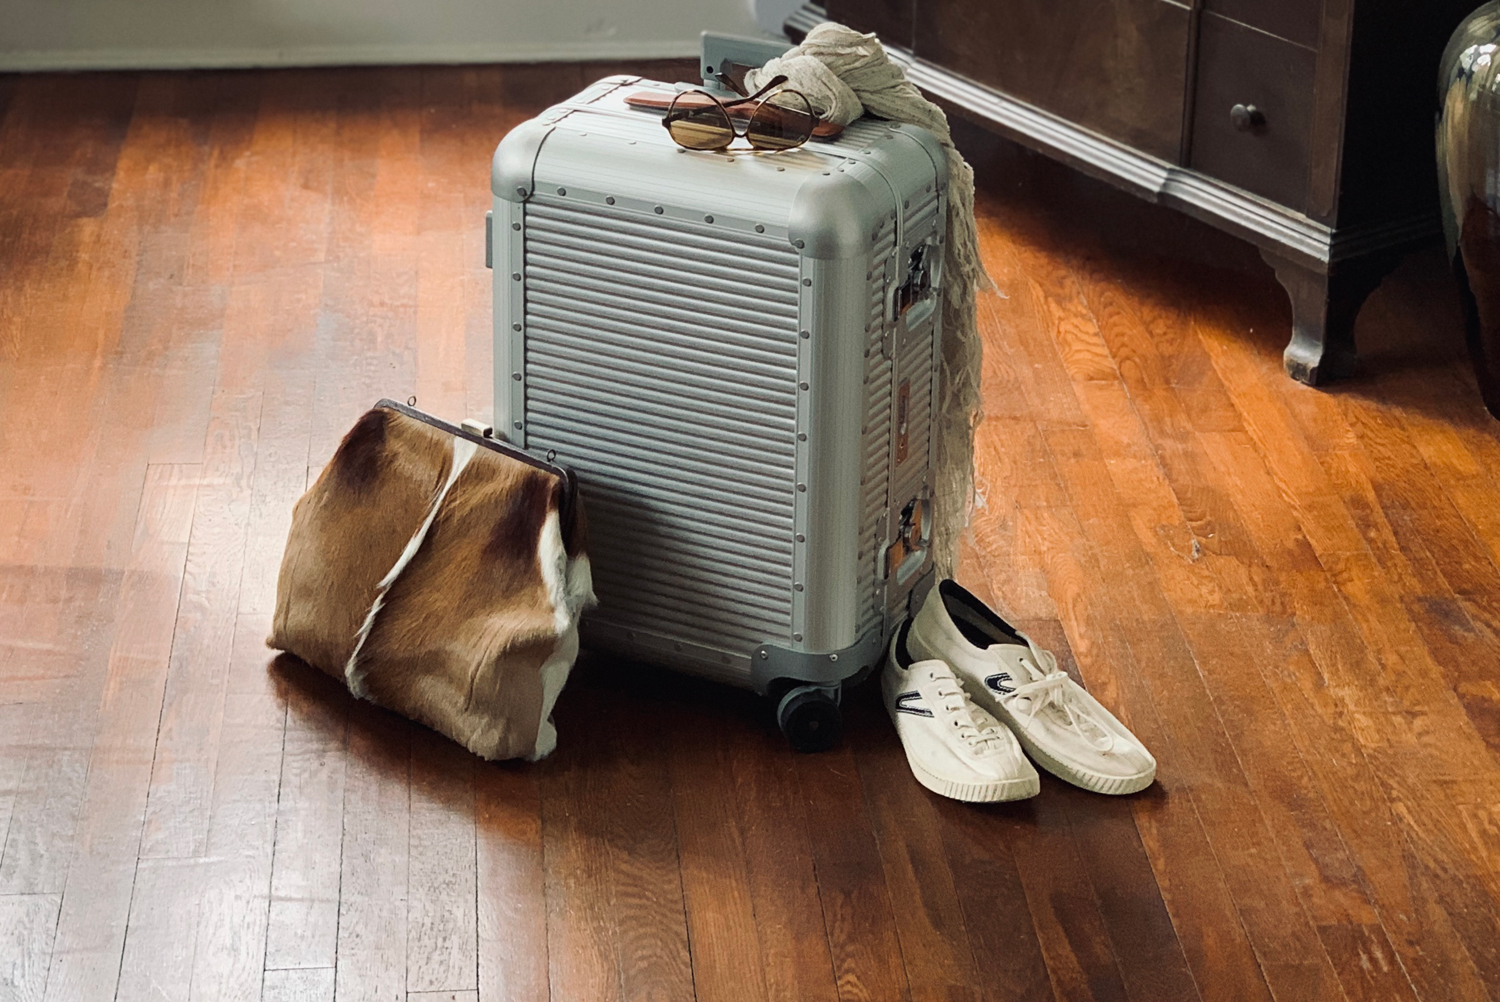 Tumi vs Rimowa Luggage [Detailed Suitcase Comparison + Reviews]